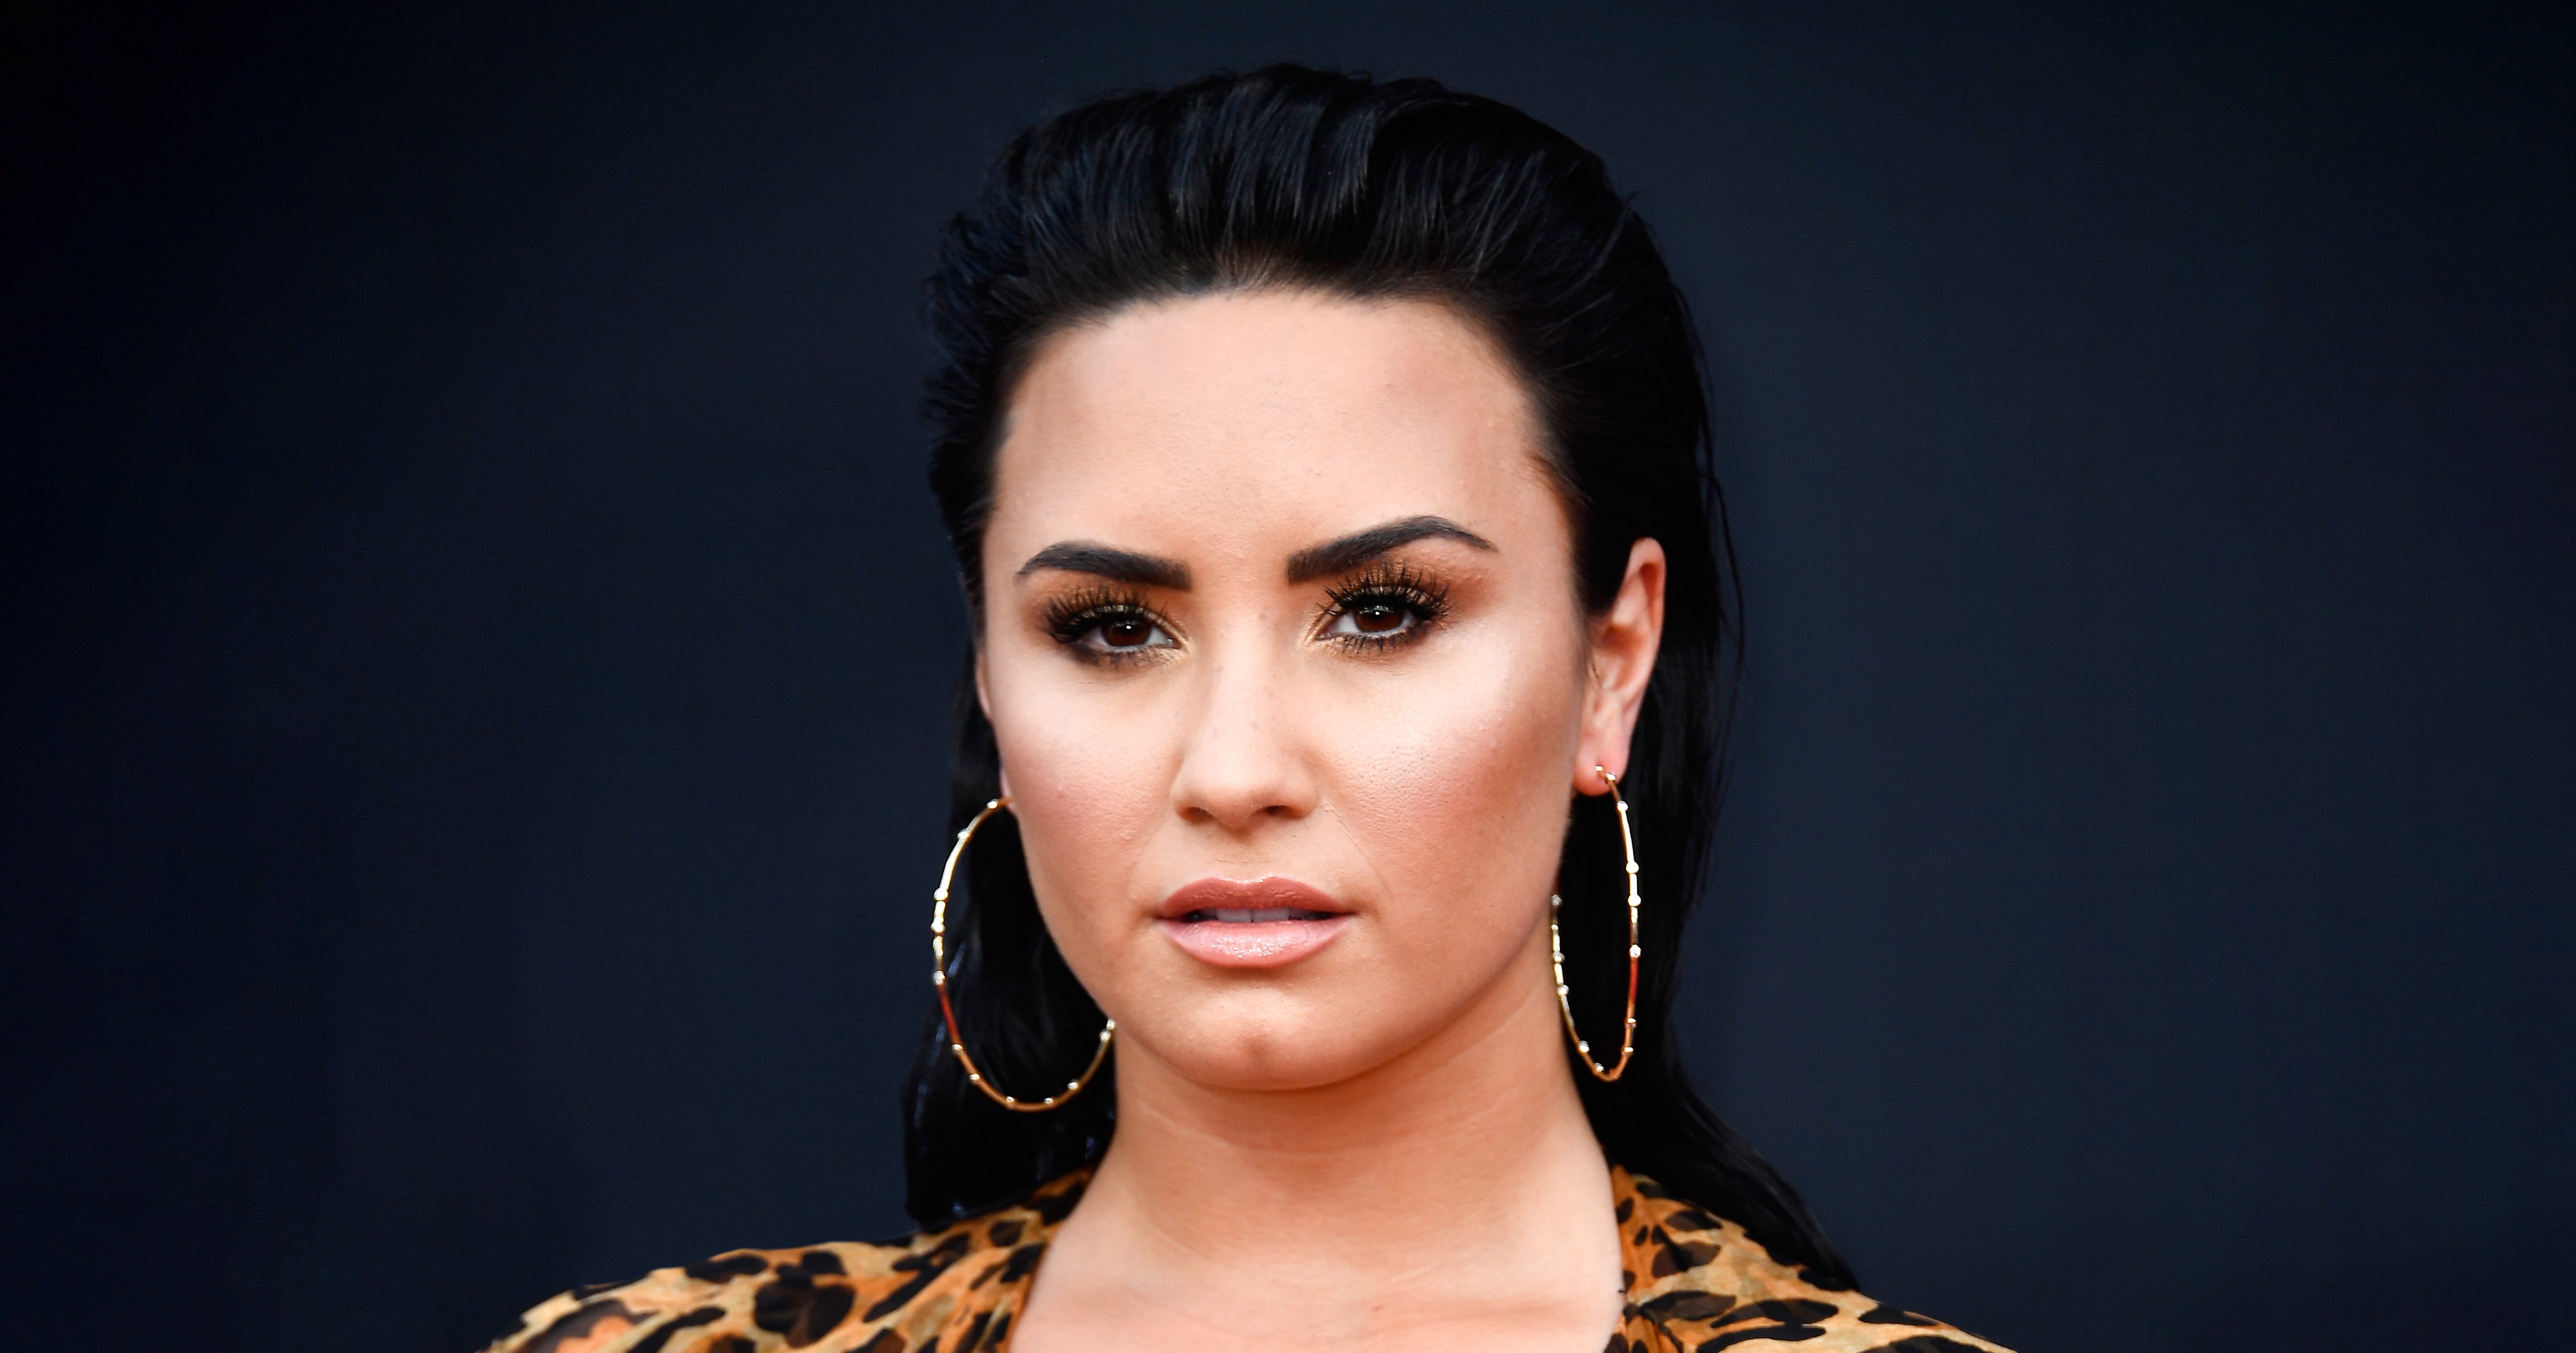 Demi Lovato drops breakup ballad Still Have Me days after split